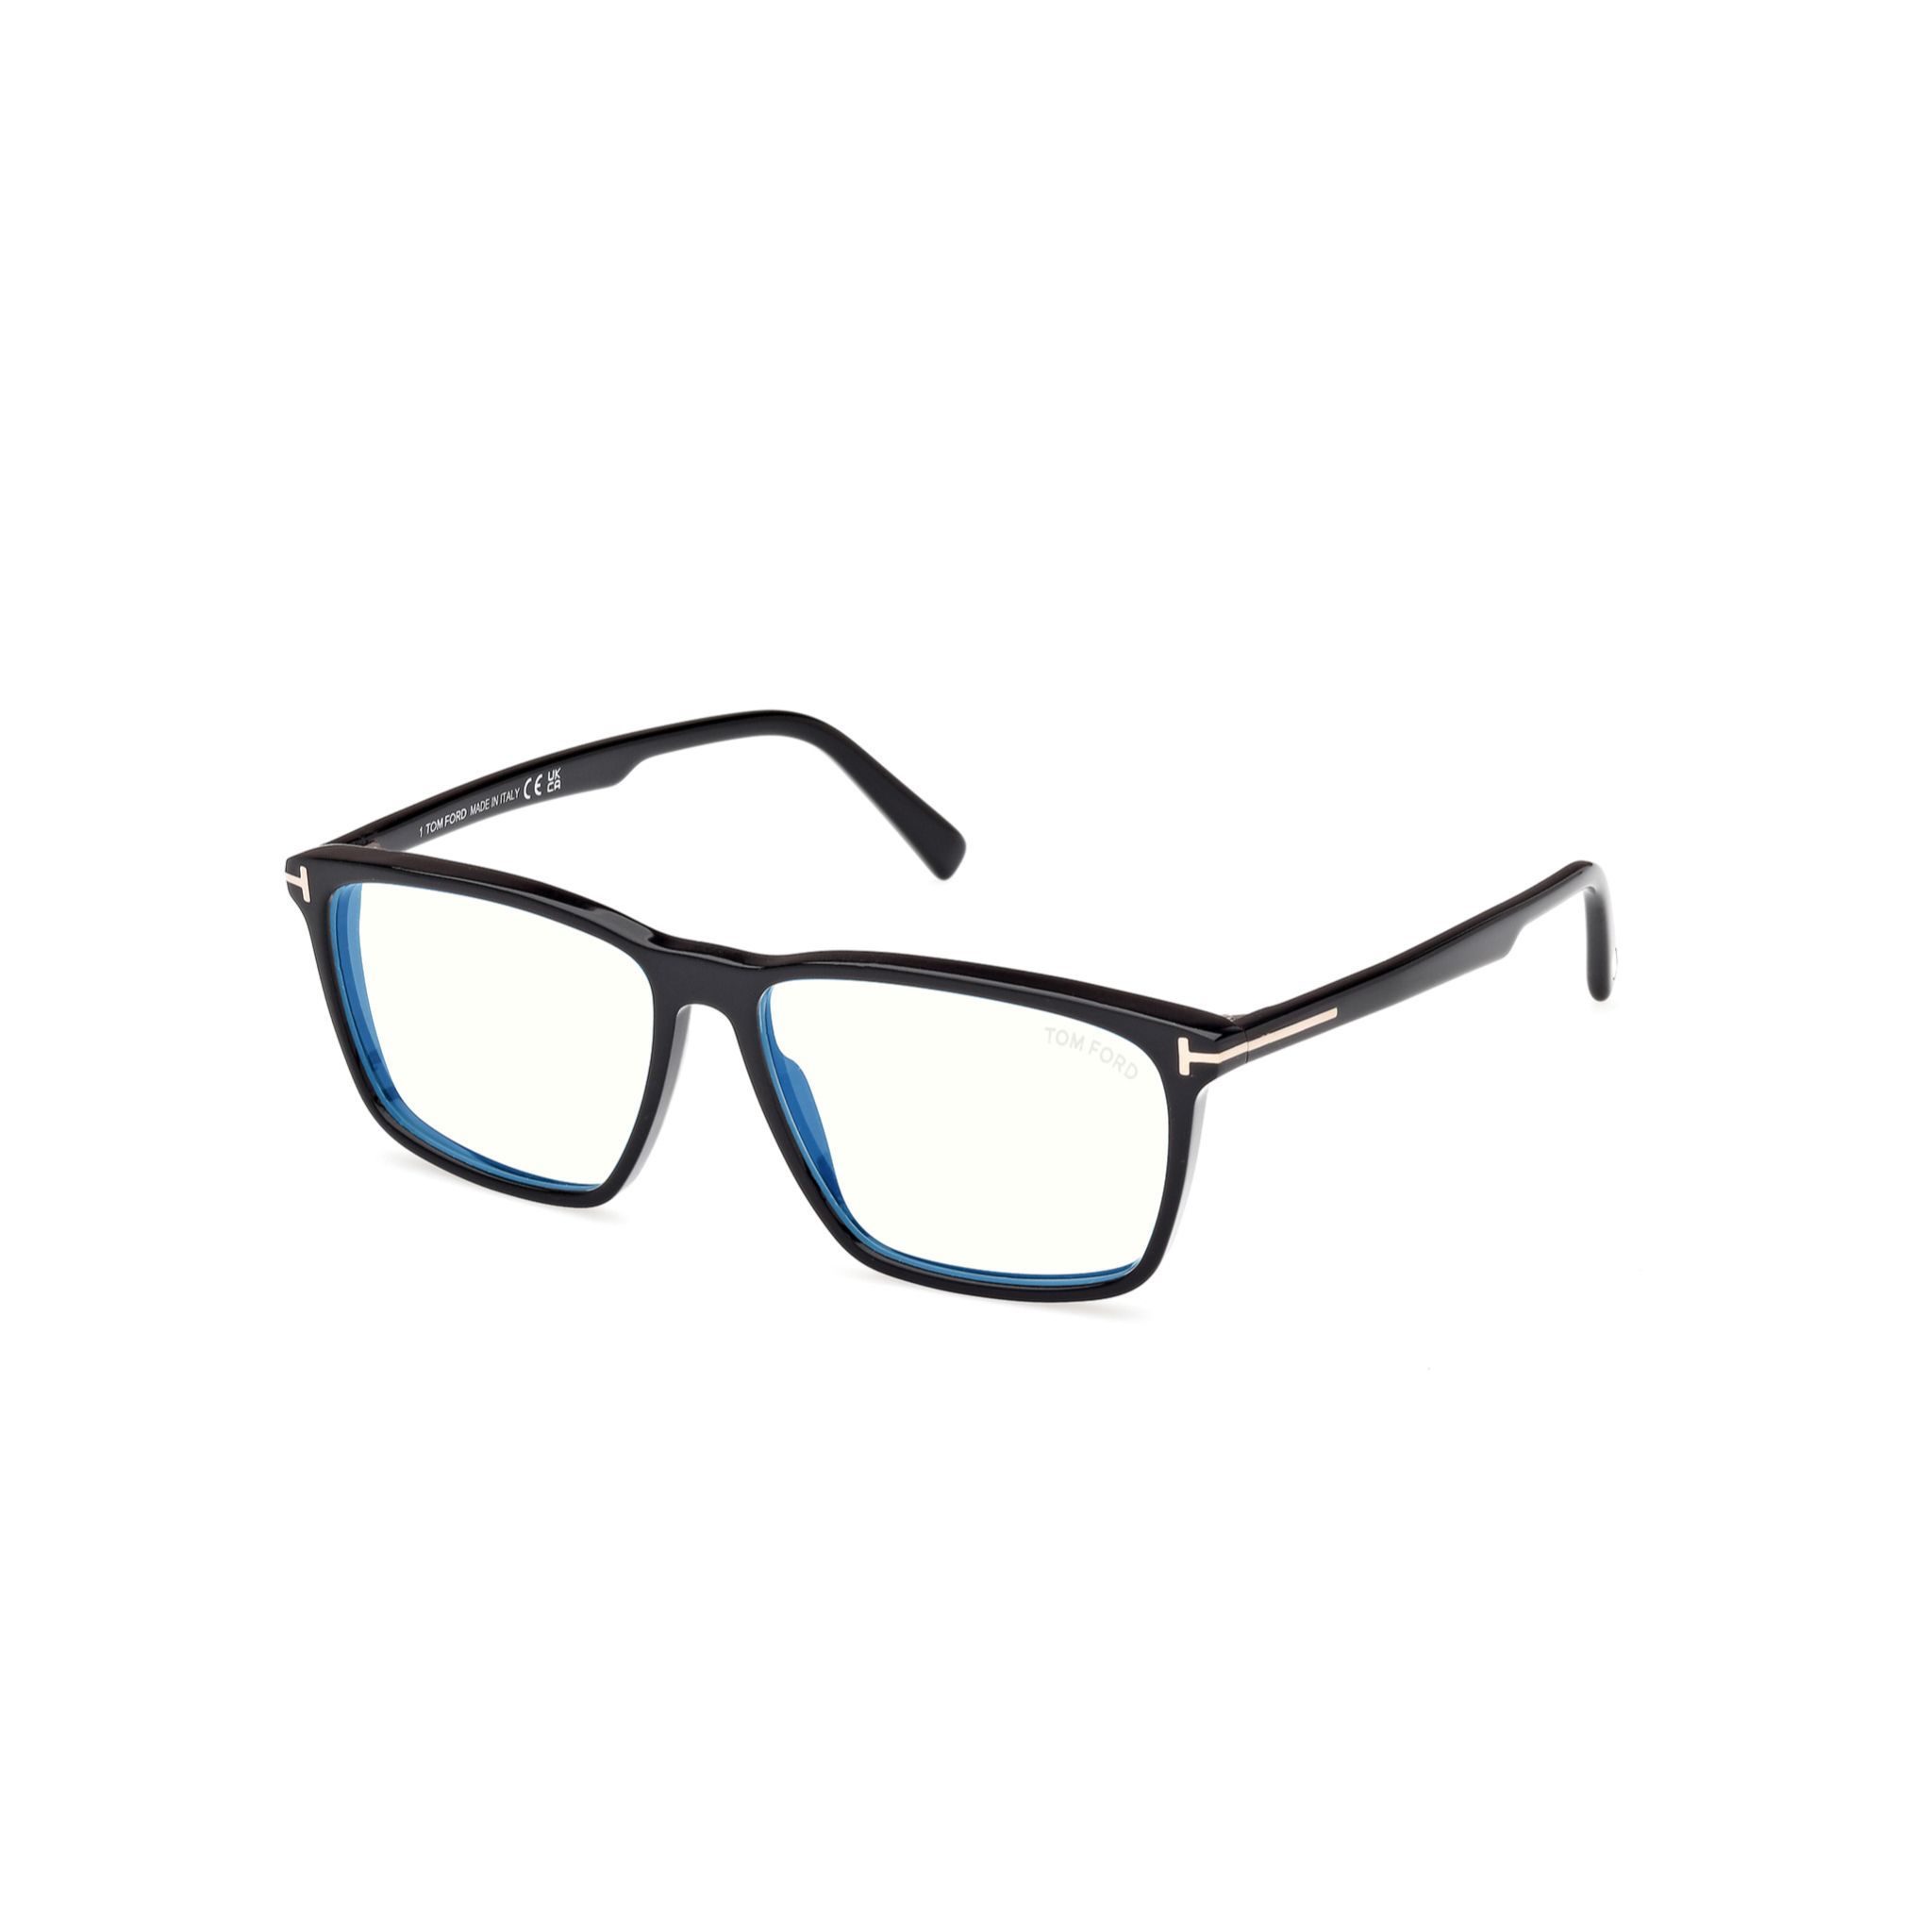 FT5959 Square Eyeglasses B001 - size 56